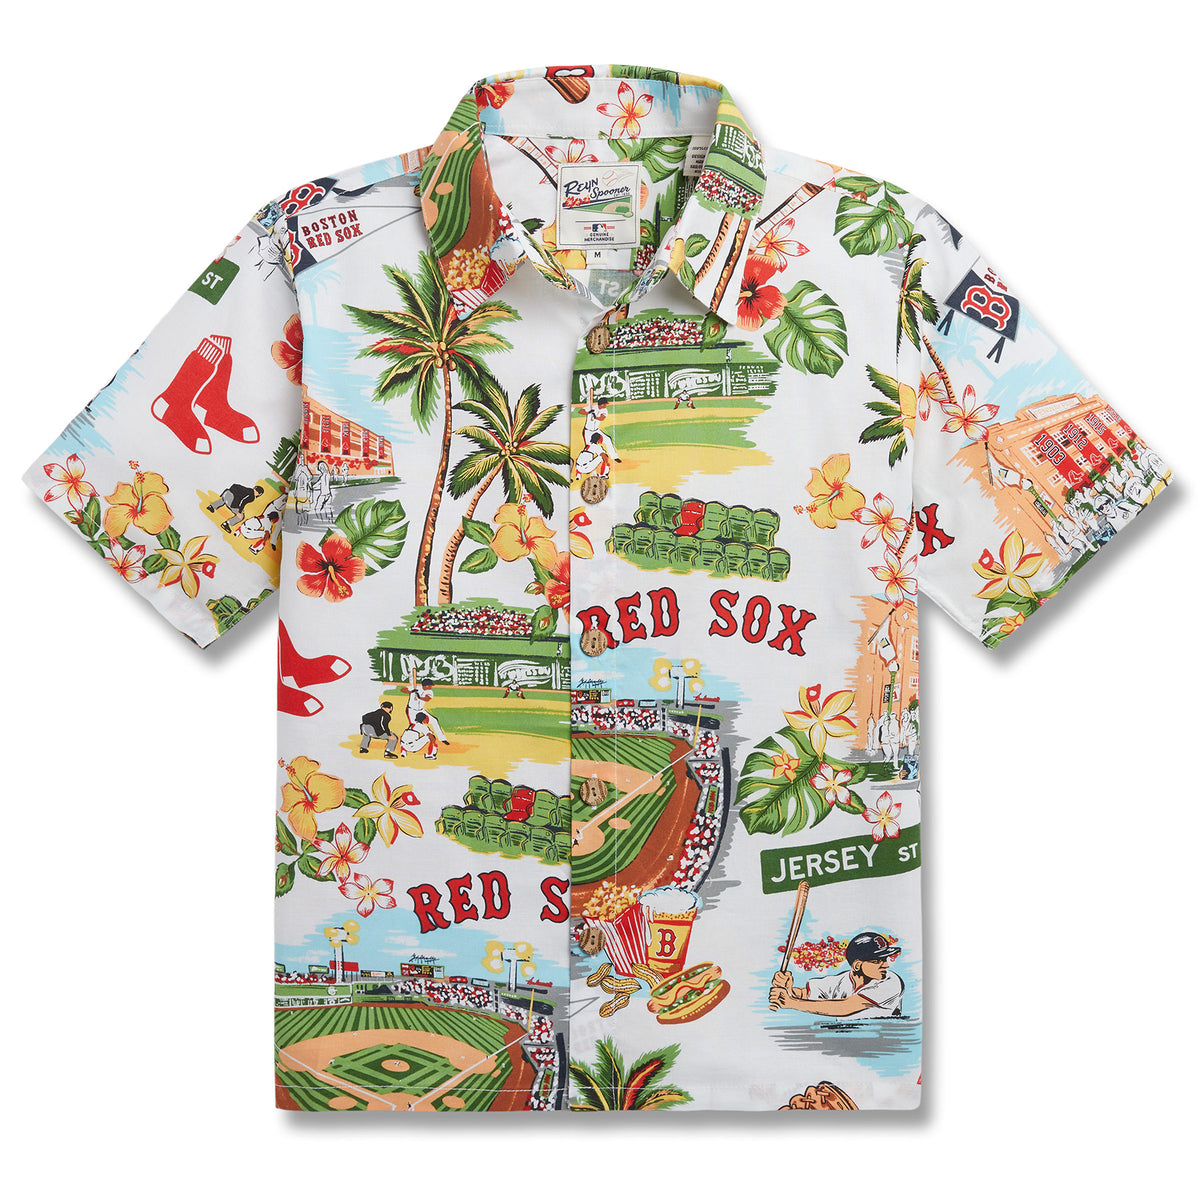 Red Sox Kids Jerseys